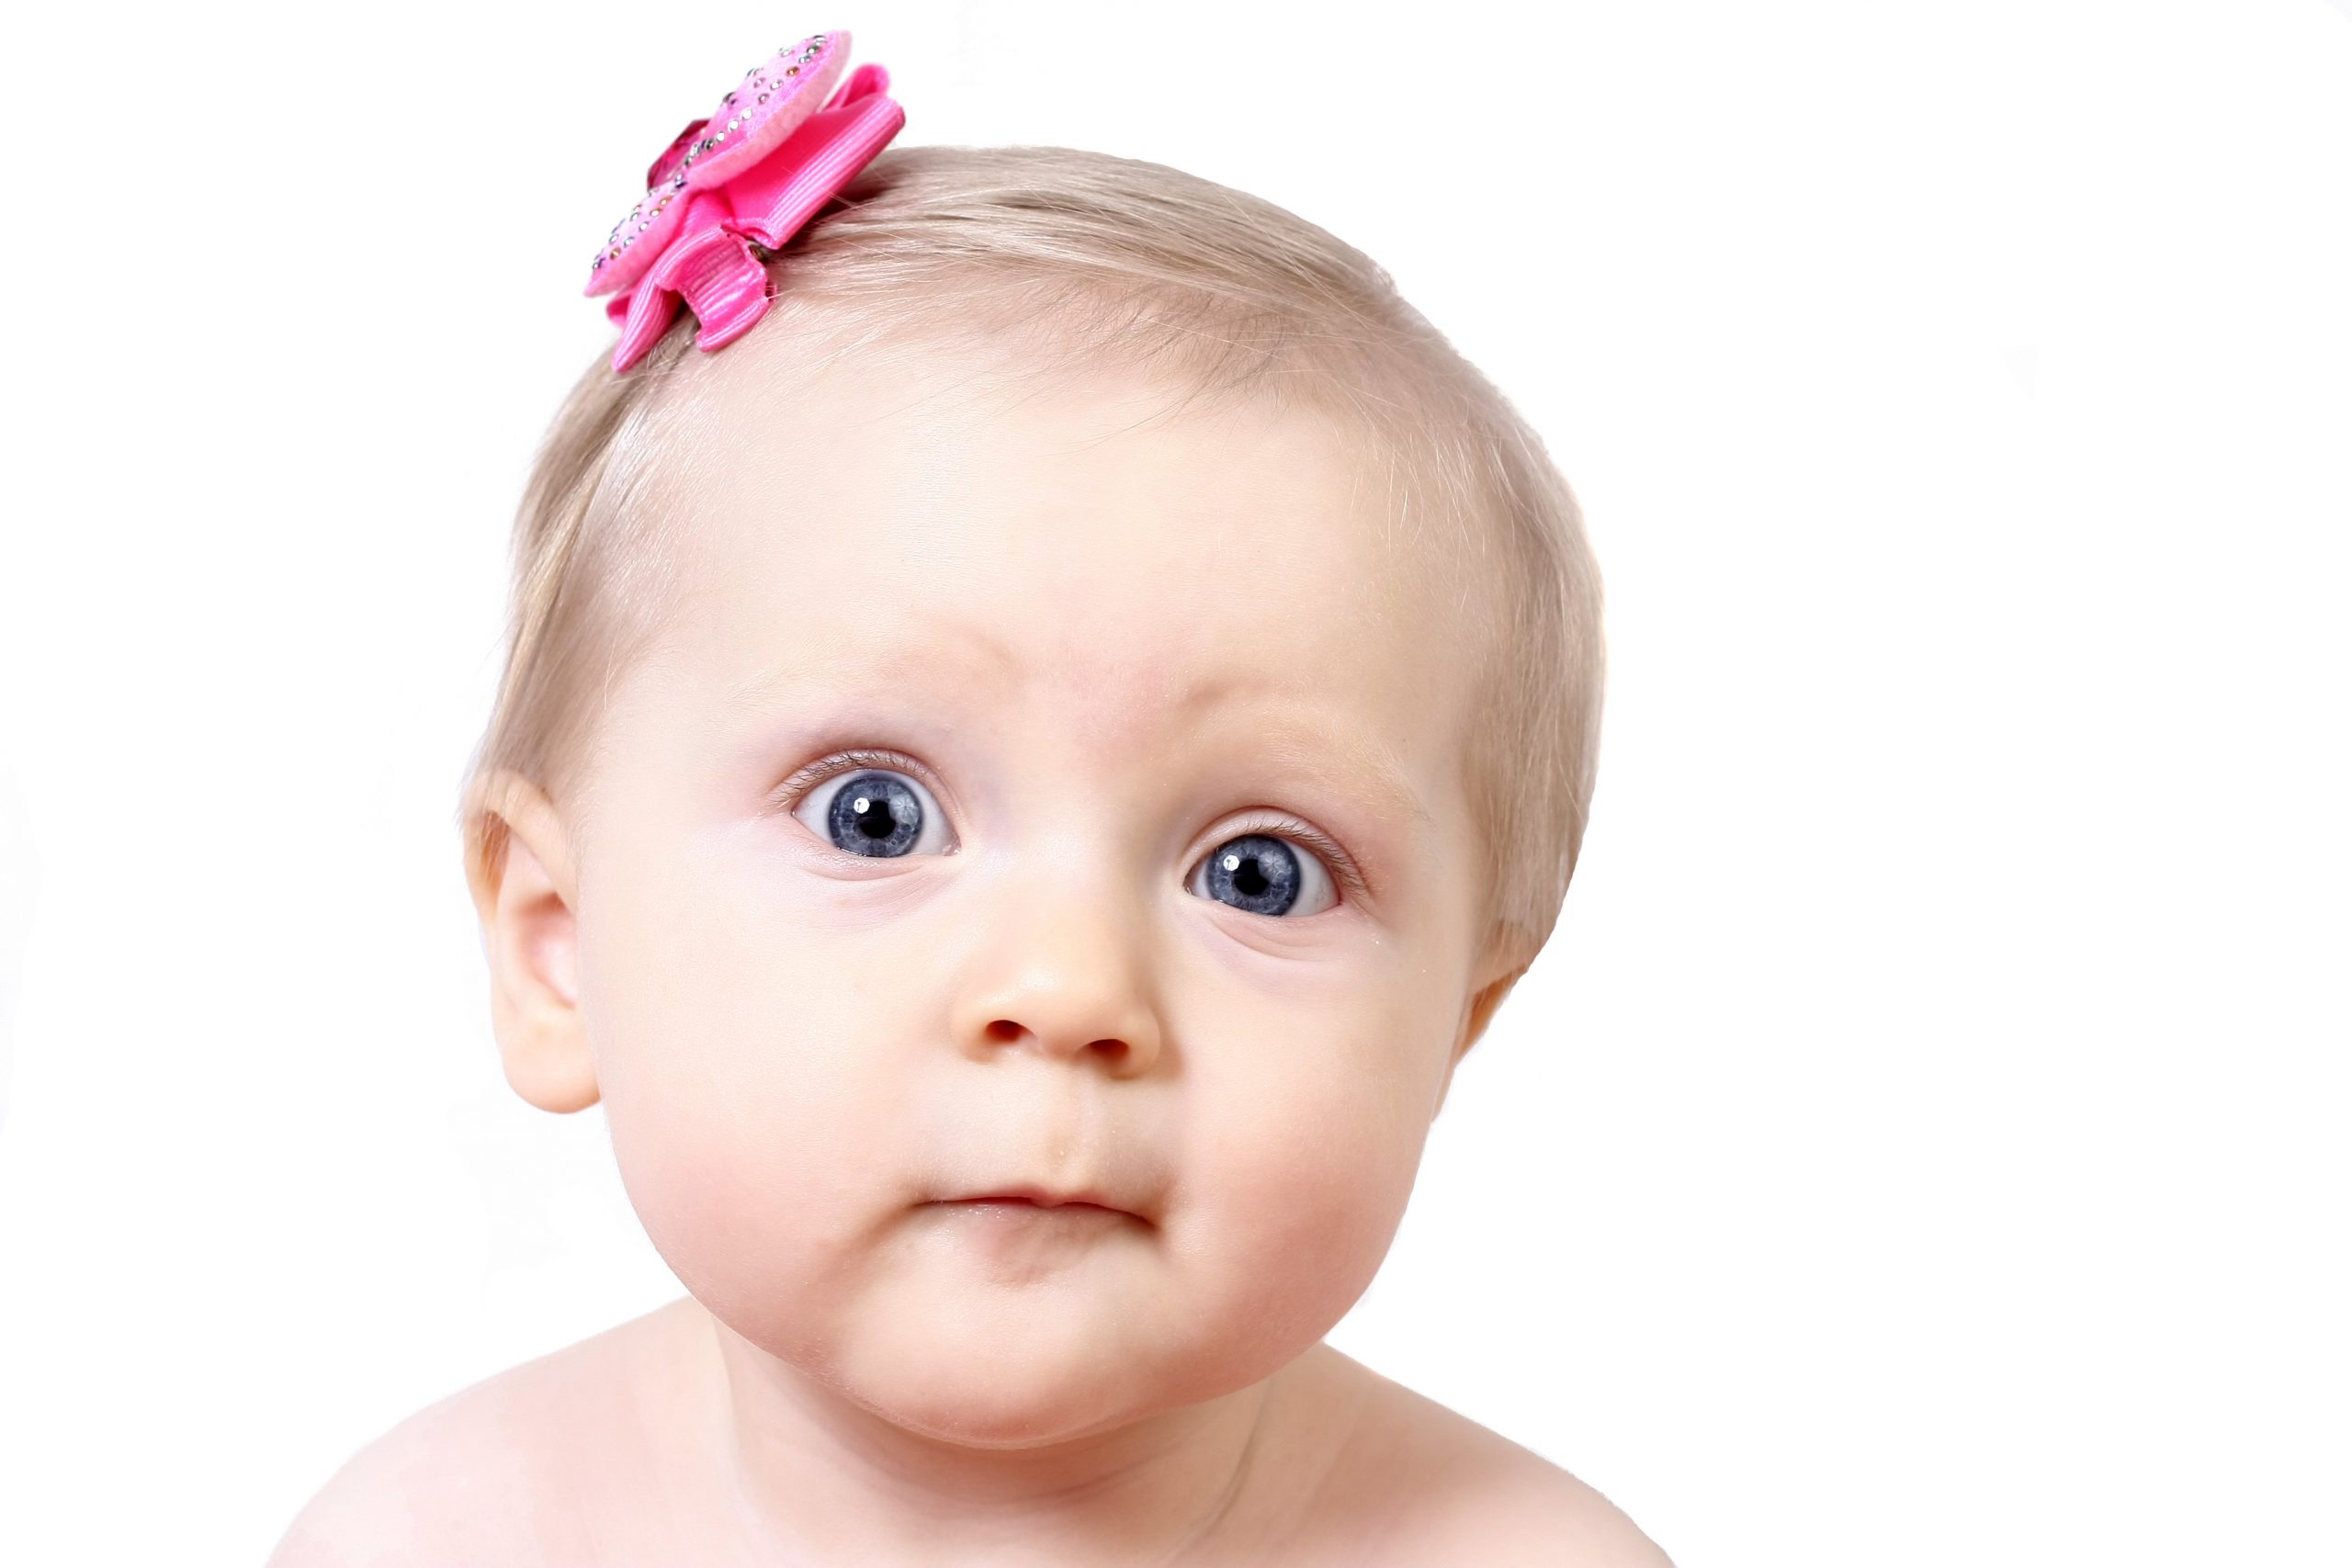 Atendimento Odontológico em Bebês